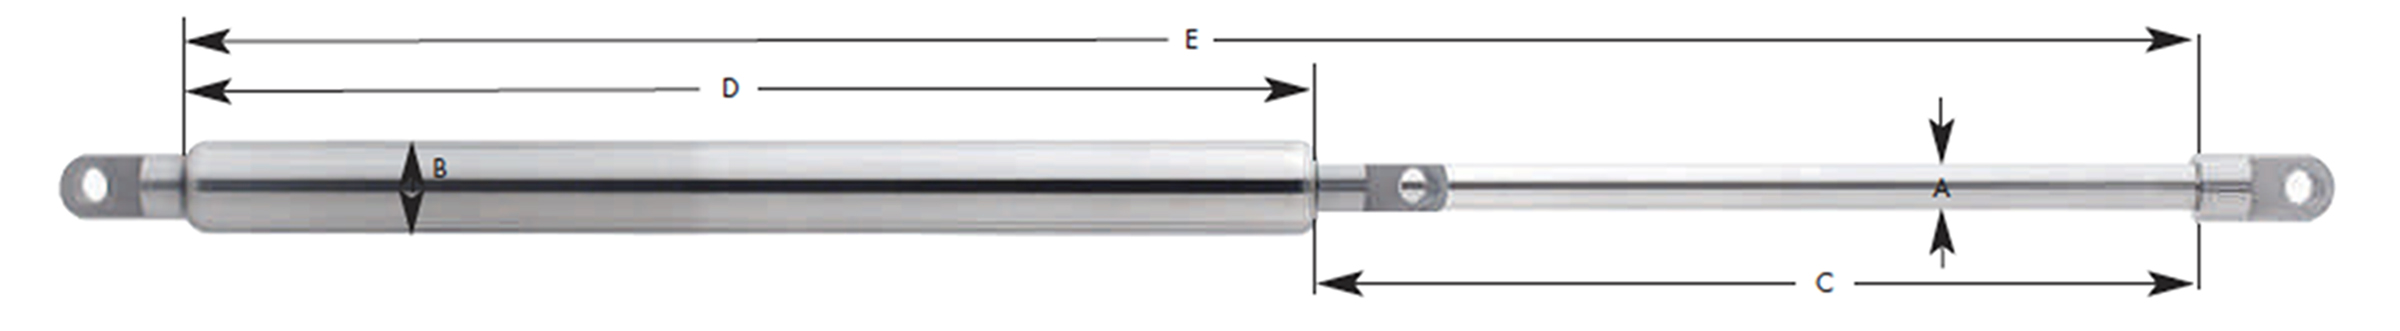 Adjustable Force Tension Gas Spring 1100-6